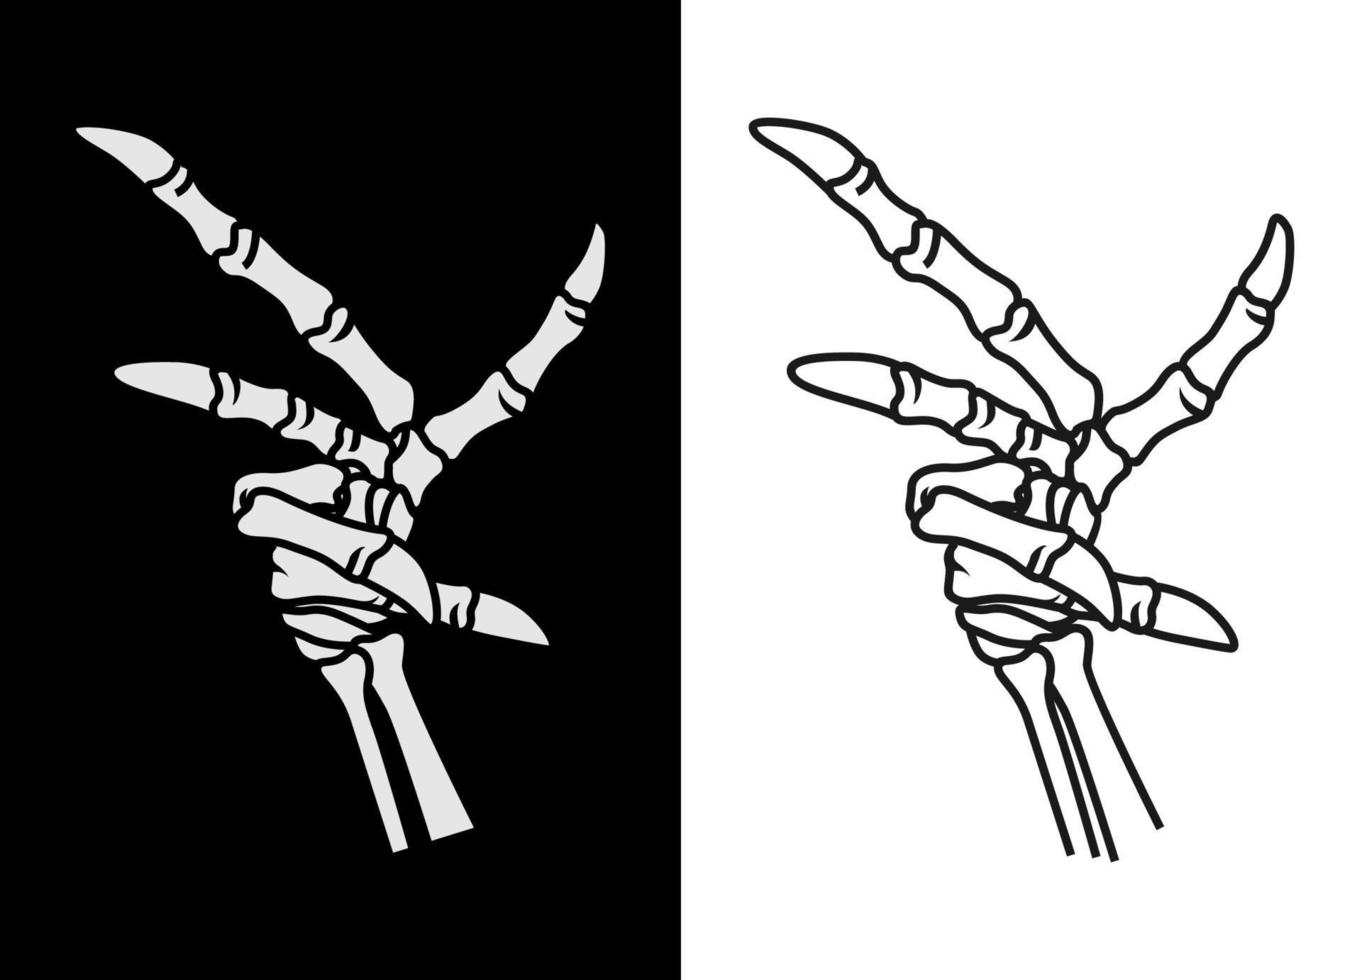 Black and white hand of human skull line art vector illustration. Rock element for apparel design, poster, merchandise, band. Vector eps 10